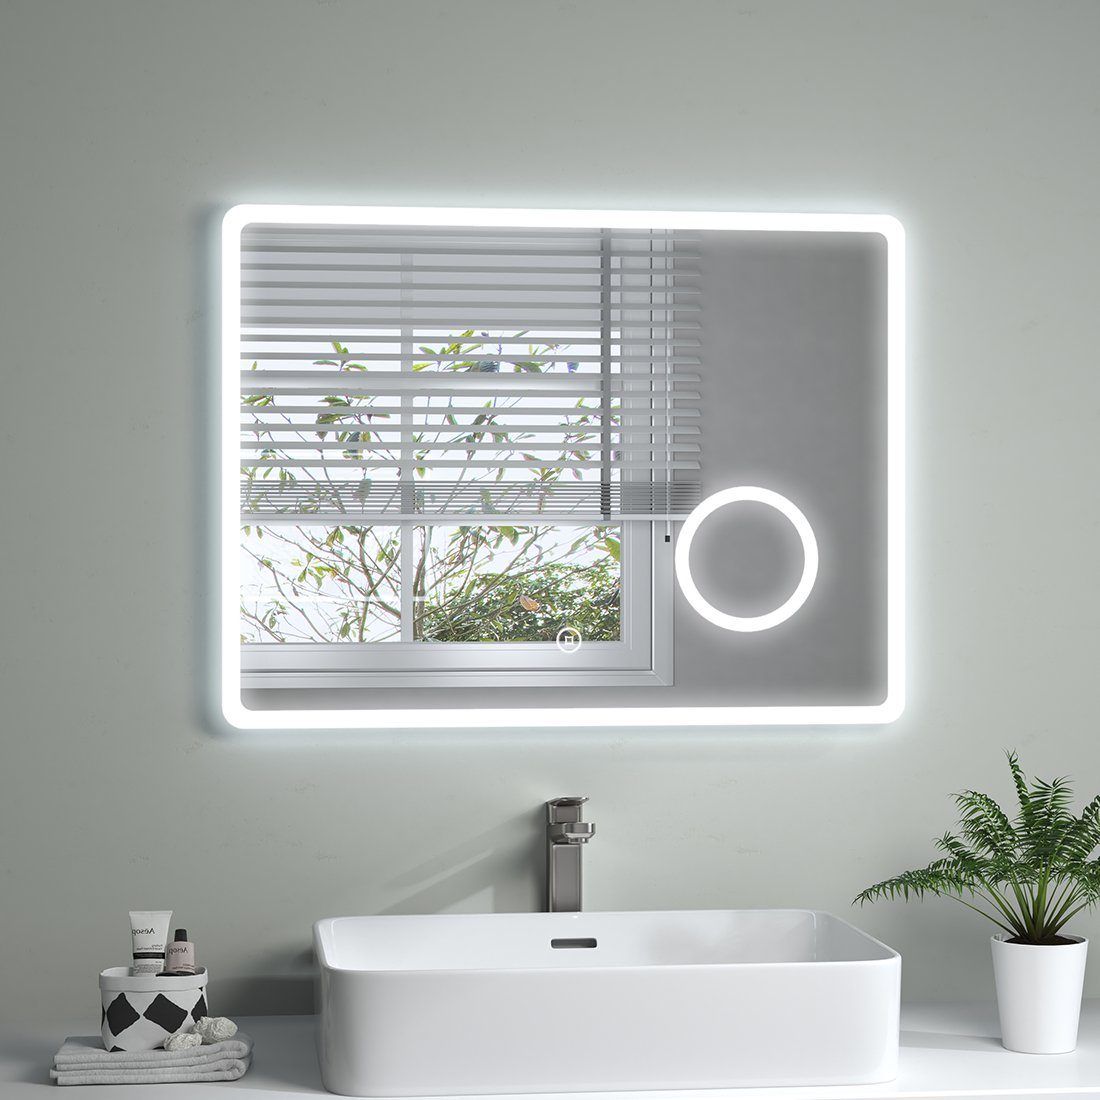 Badspiegel Schminkspiegel Badezimmerspiegel LED mit S'AFIELINA Energiesparend, Beleuchtung Lichtfarben,Dimmbar,Beschlagfrei,Energiesparend,IP54 Touchschalter,3